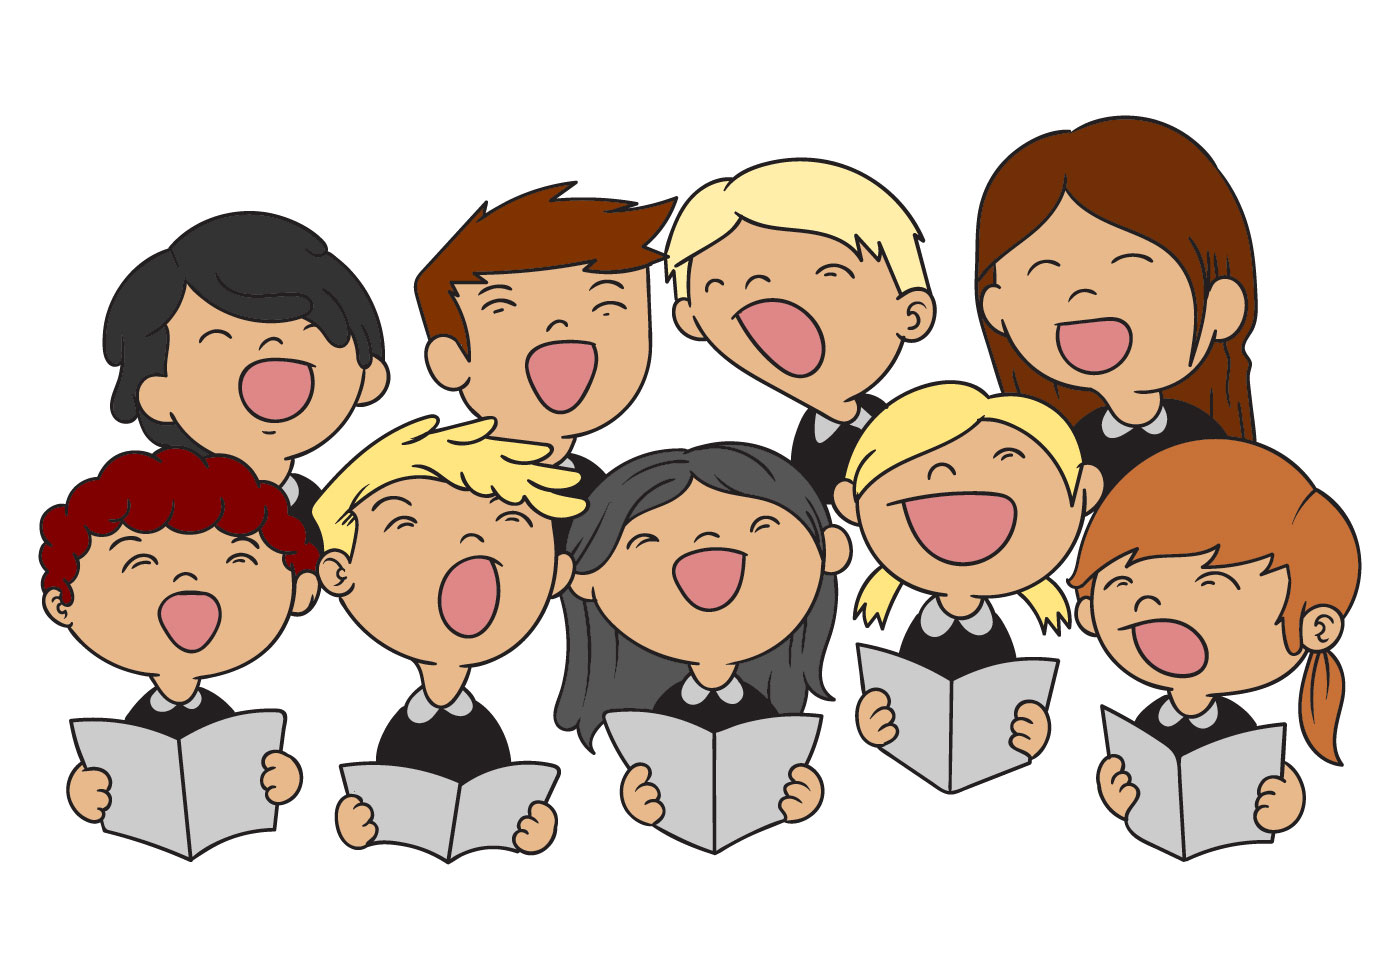 Download the Kids Choir Illustration Vector 129196